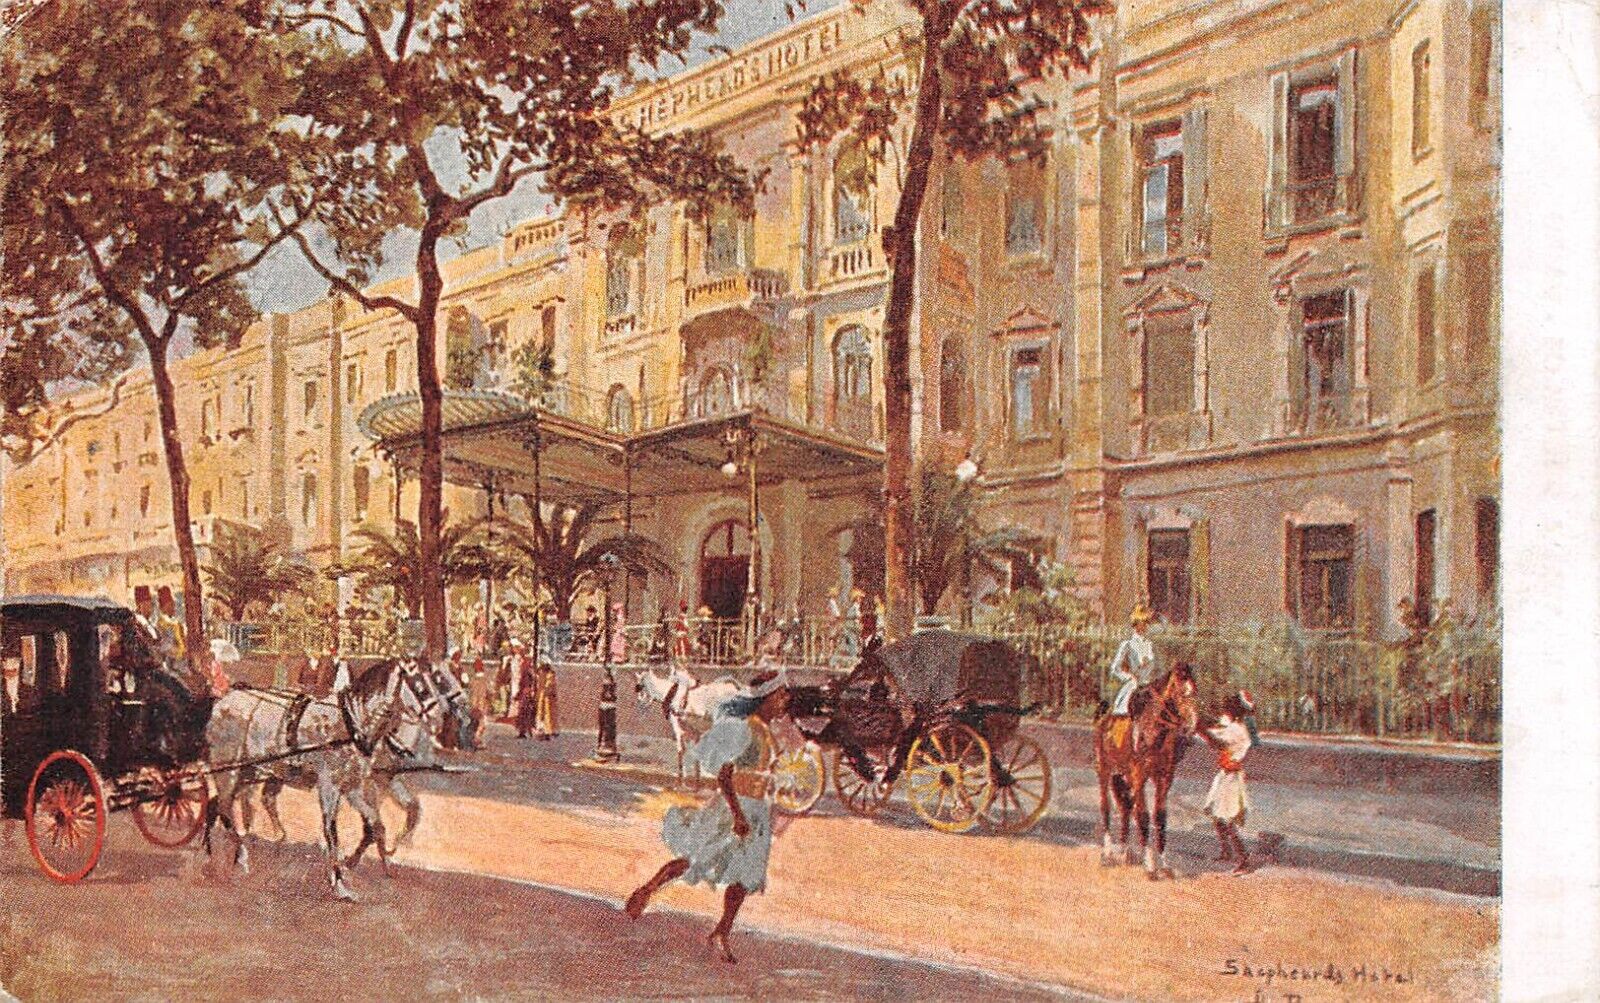 POSTCARD EGYPT CAIRO SHEPHERD\'S HOTEL ANIMATED SCENE c 1919